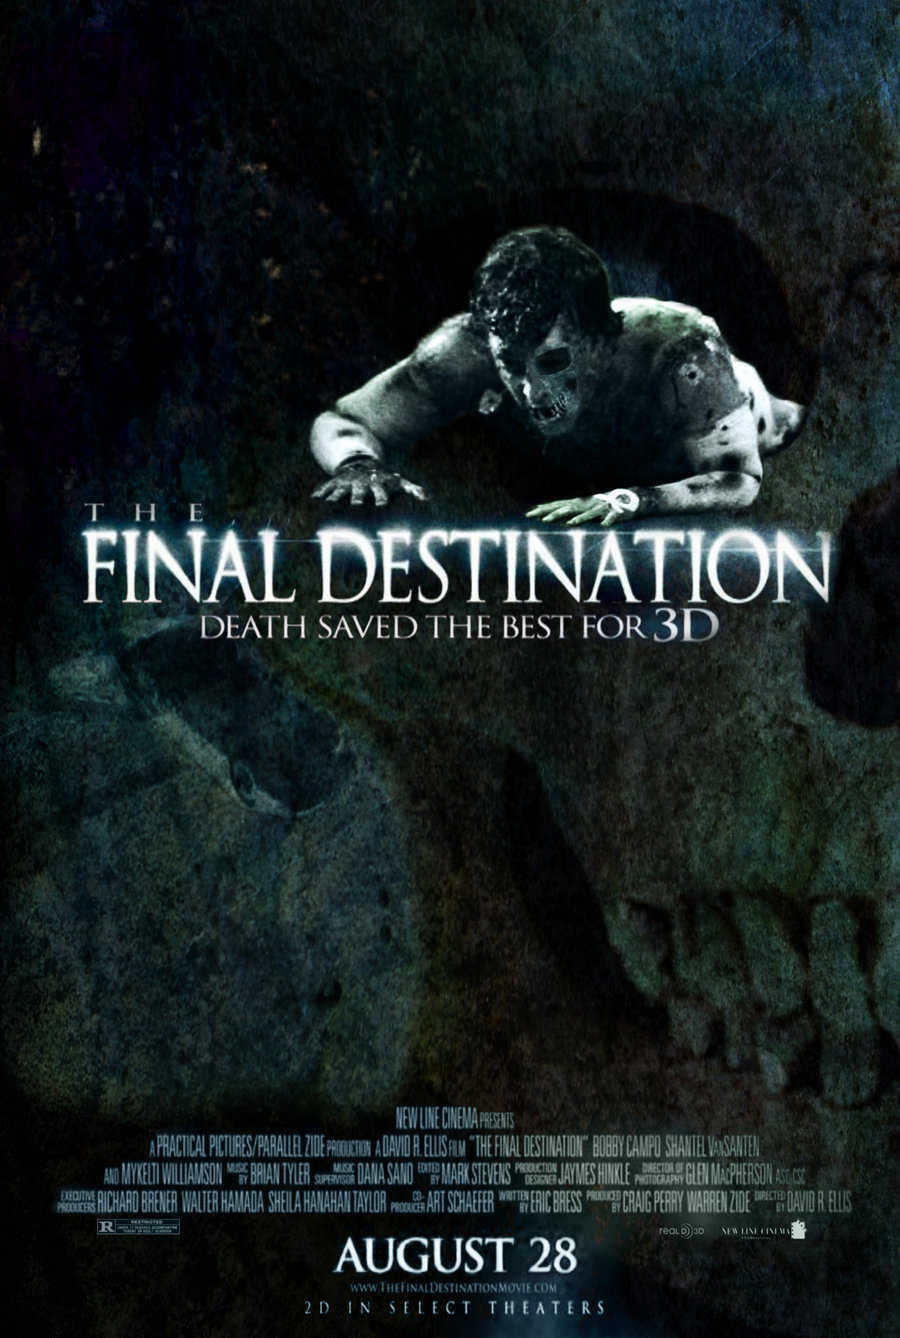 Movies On Demand Online: Watch Online Final Destination 5 H-D